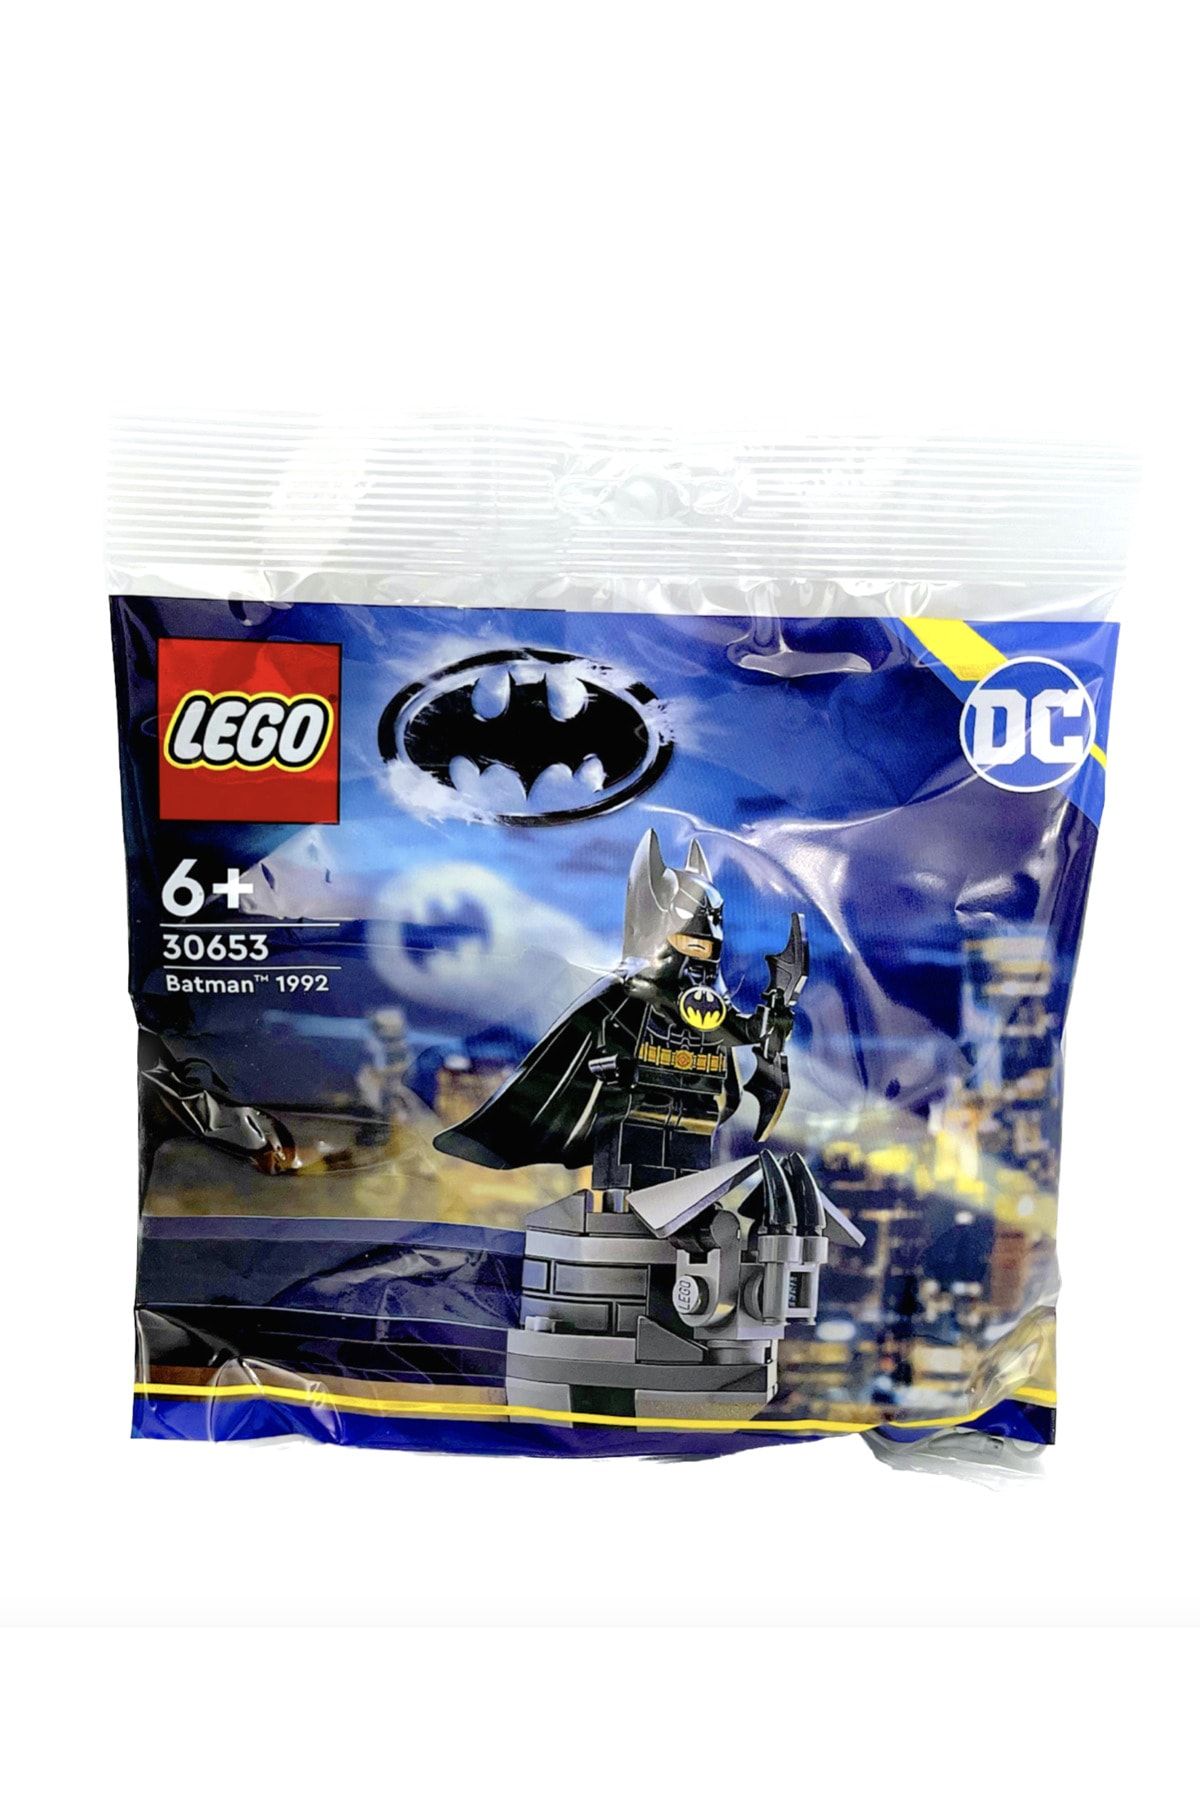 LEGO DC 30653 Batman™ 1992 V110 Polybag (40 Pieces)